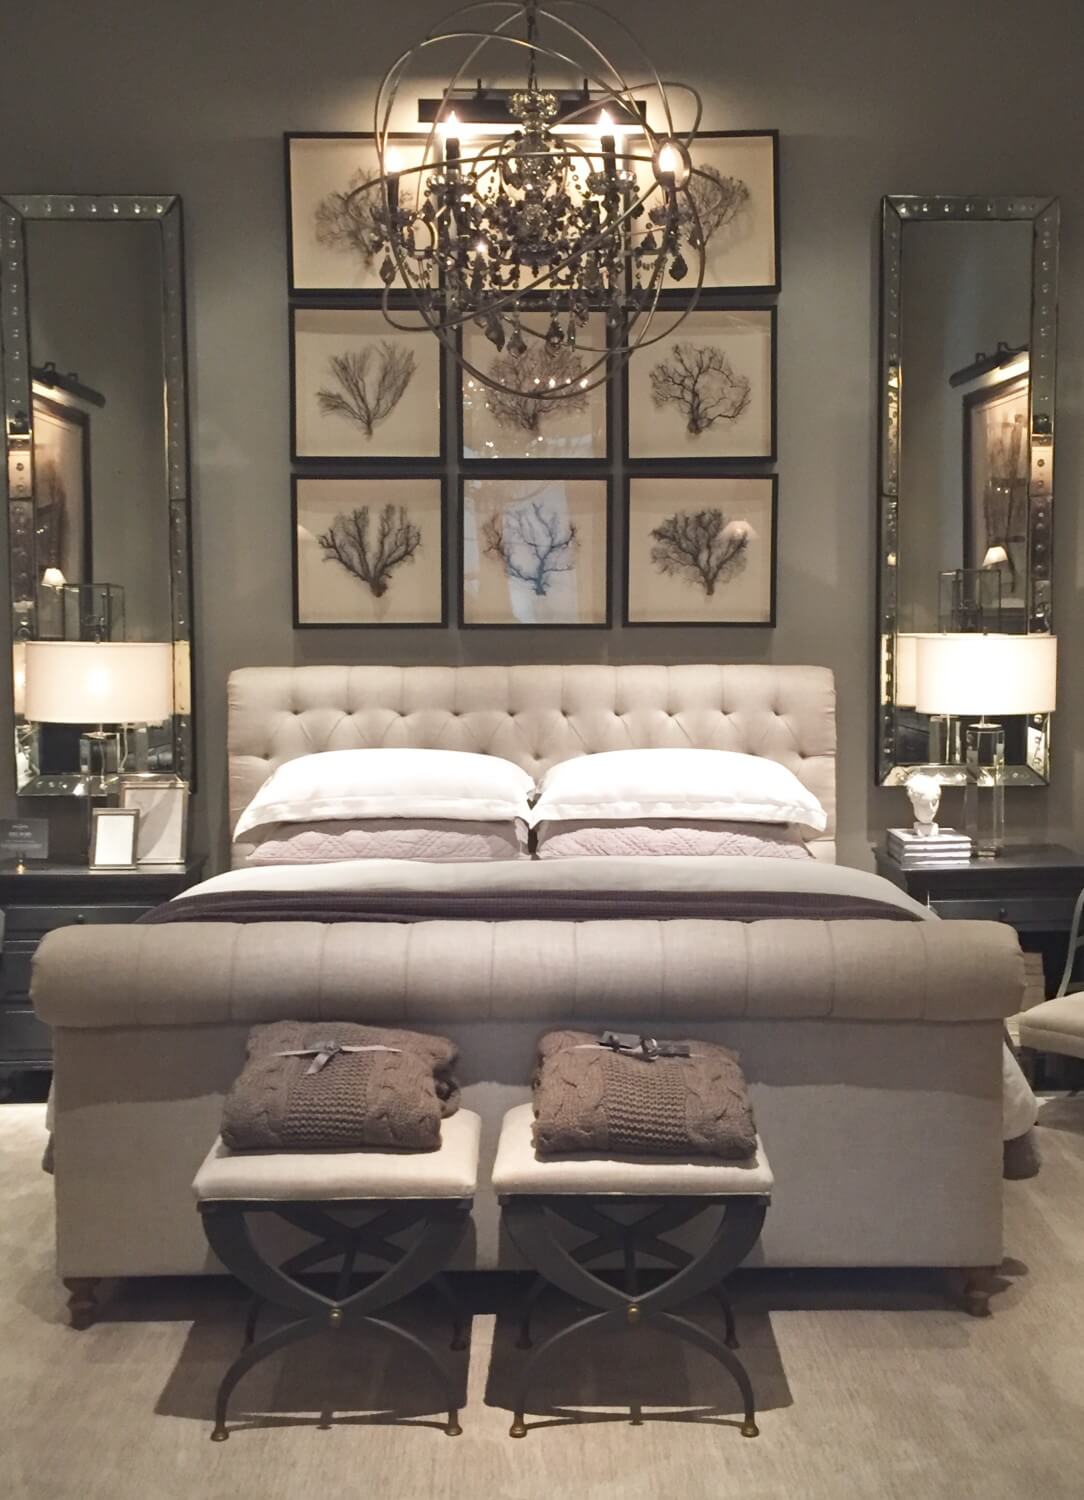 Grey Bedroom Decor With Metallic Accents